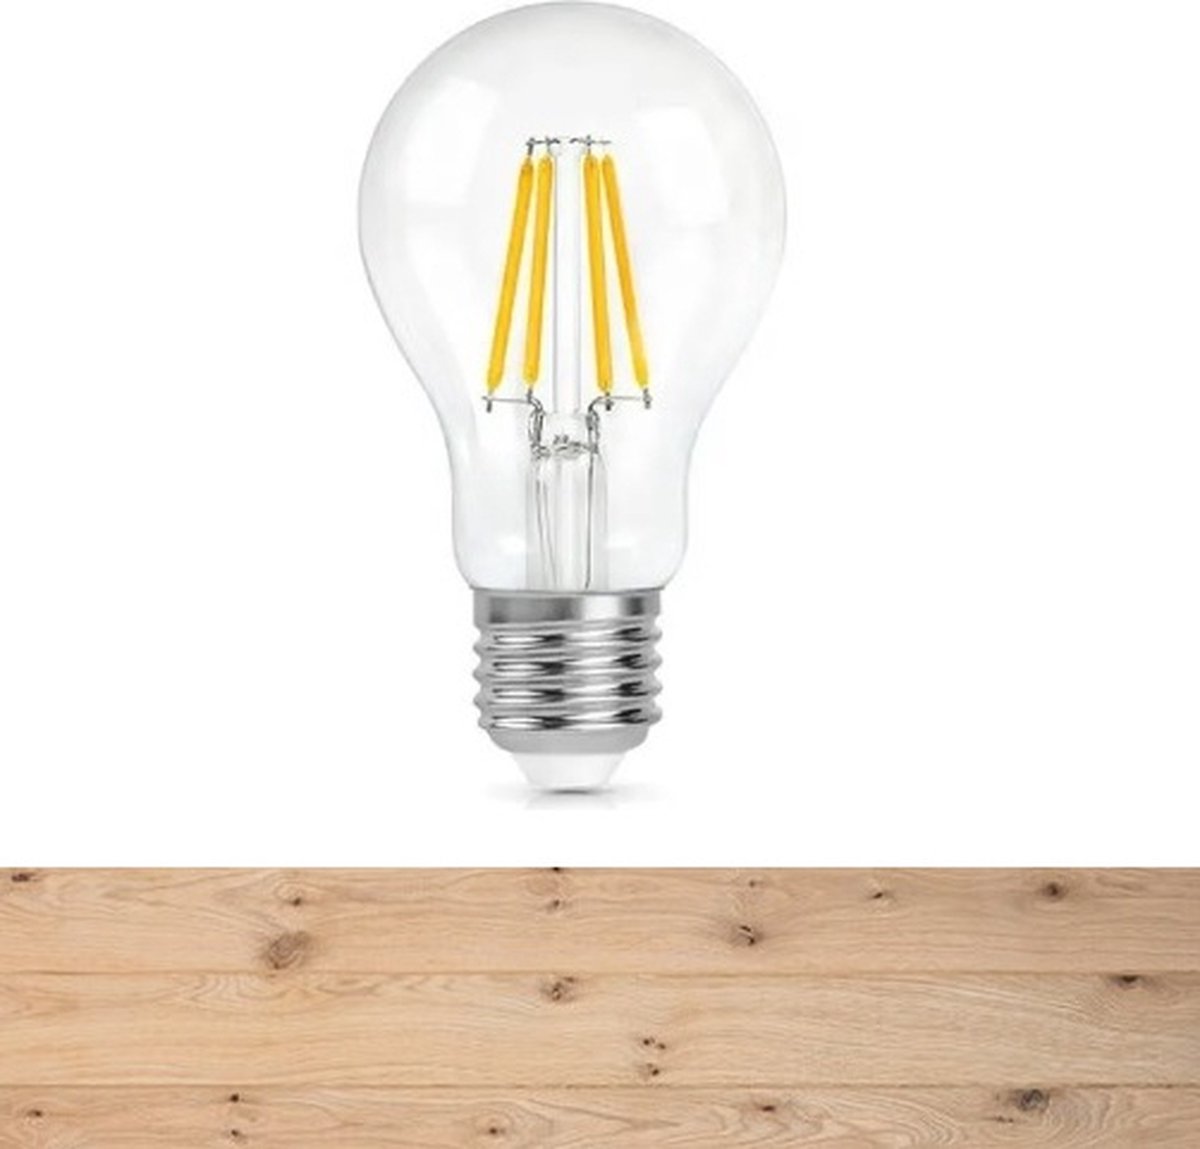 LED lamp | Edison | 6 cm | A60 | Filament lamp | E27 | 1x4W 2700K | A+ | Energiezuinig | Wandlamp |